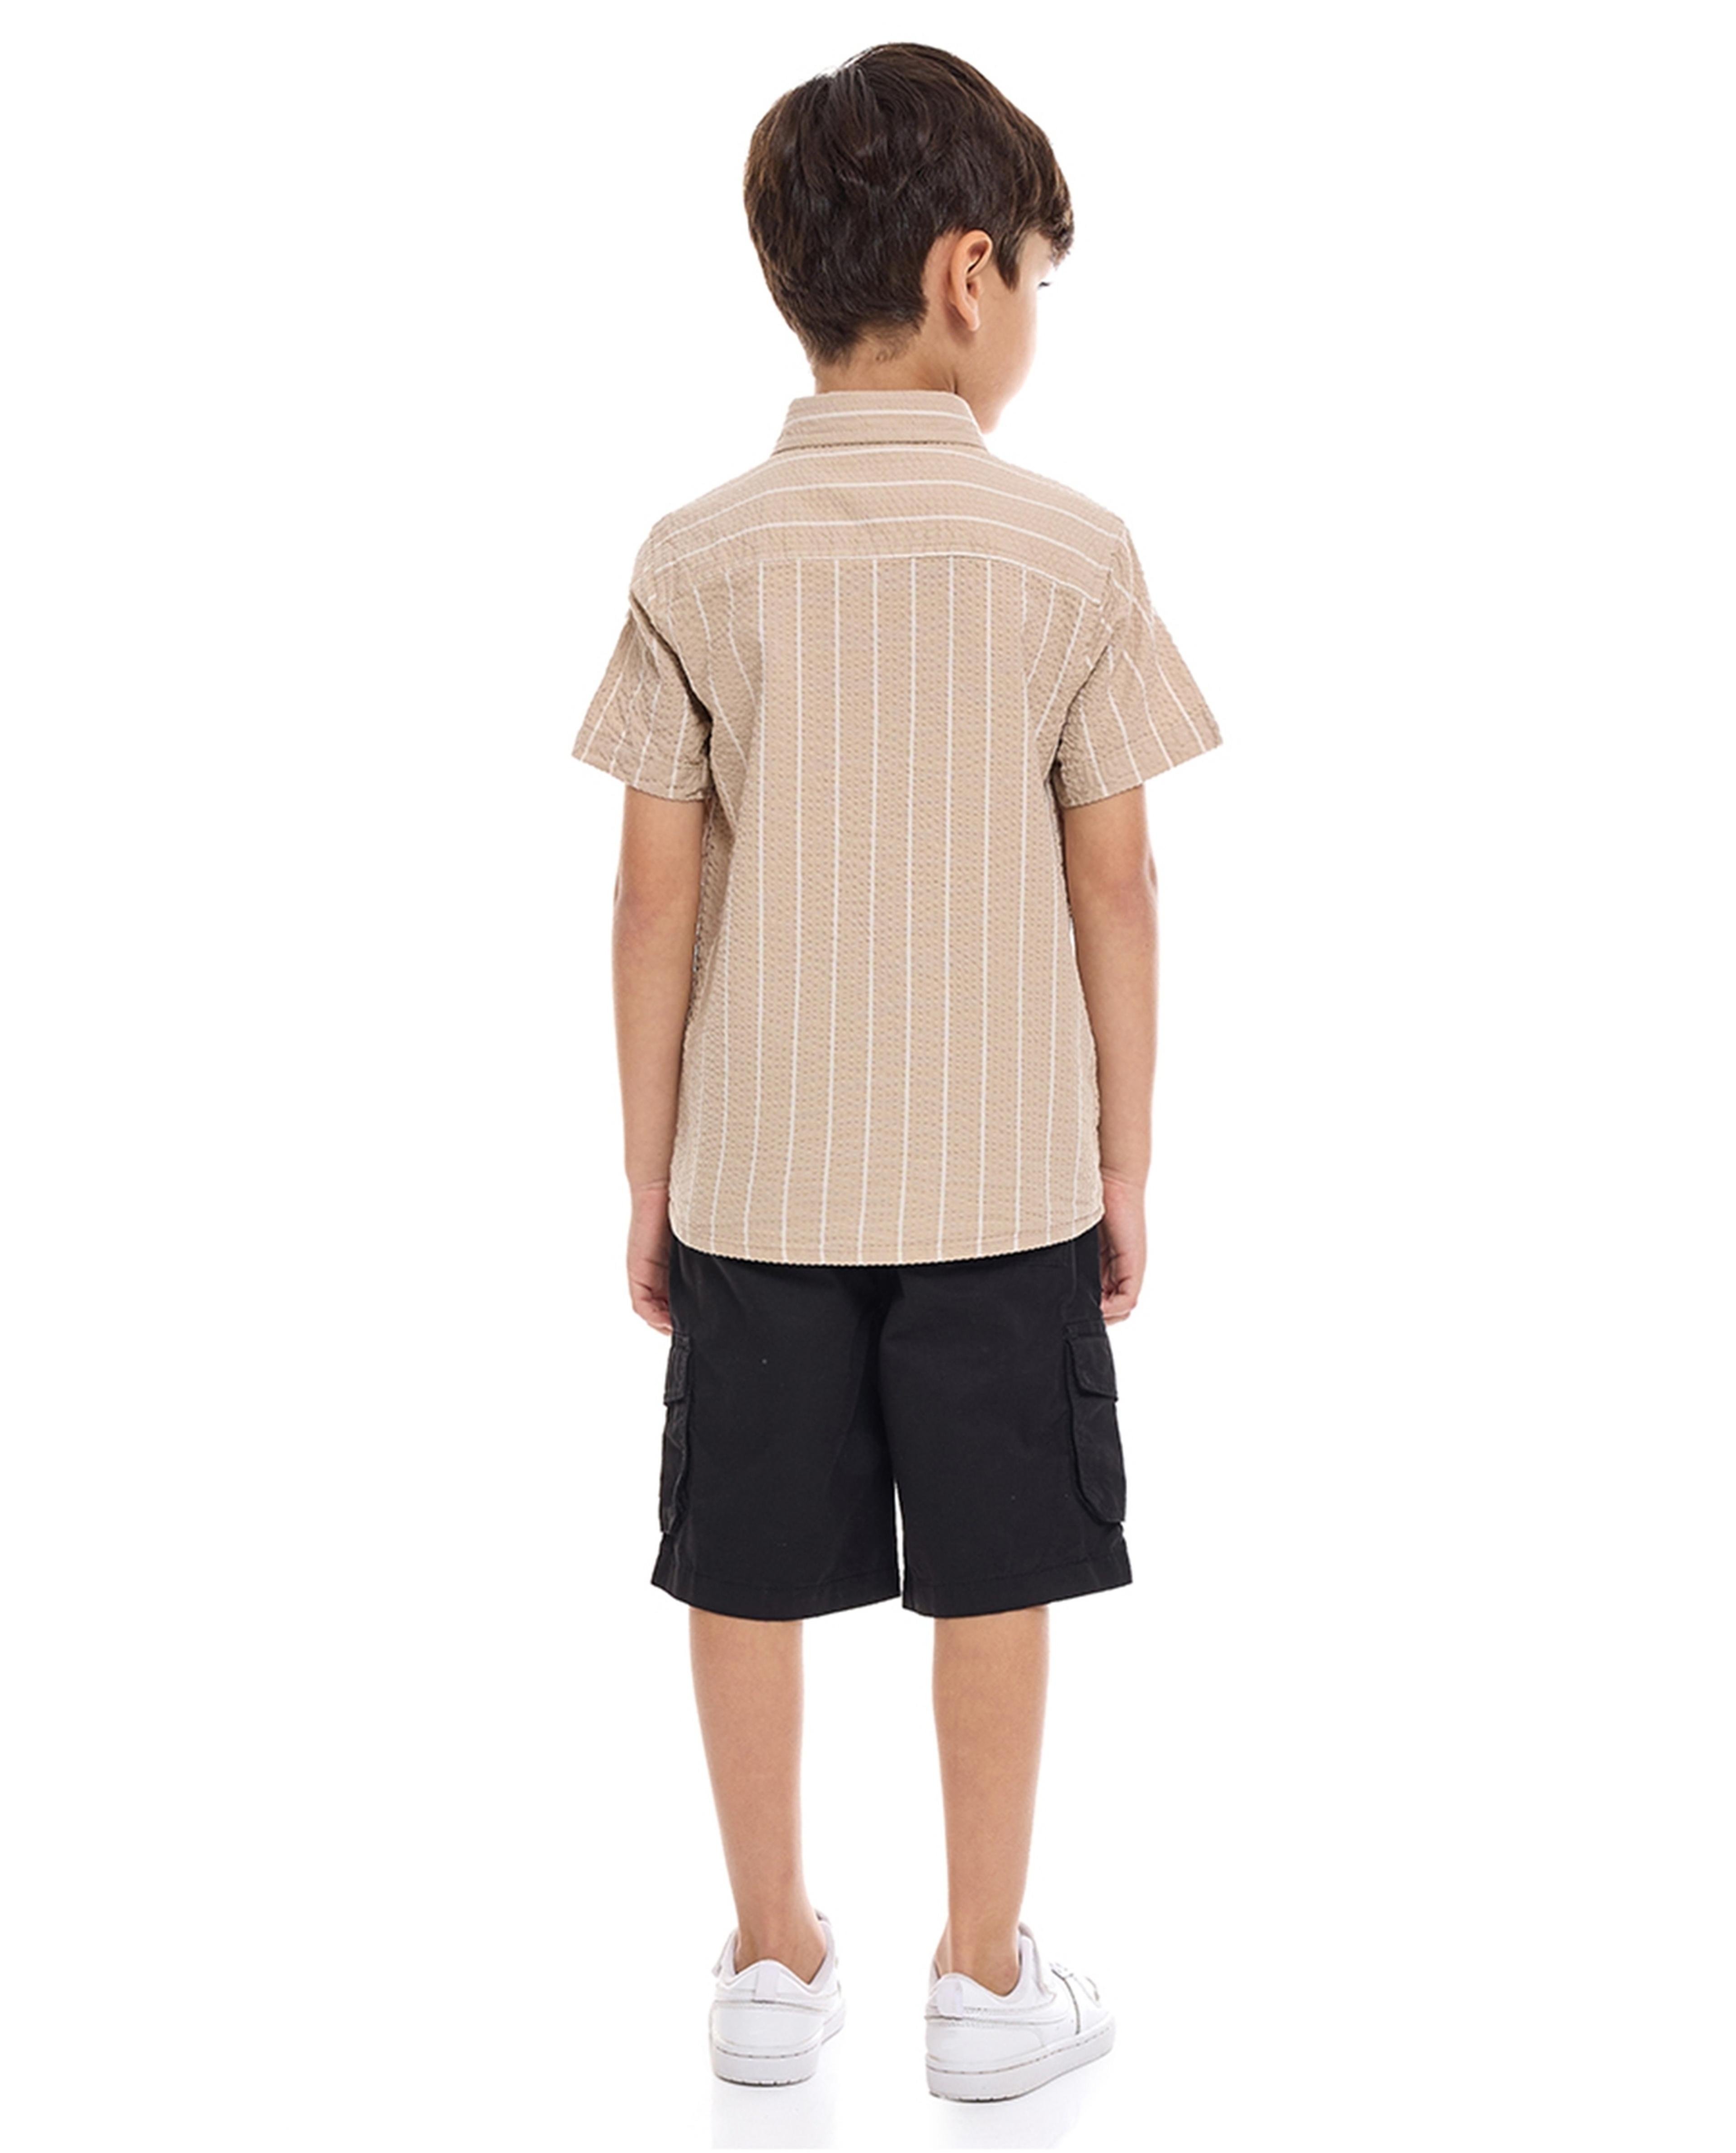 Striped Shirt and Shorts Set